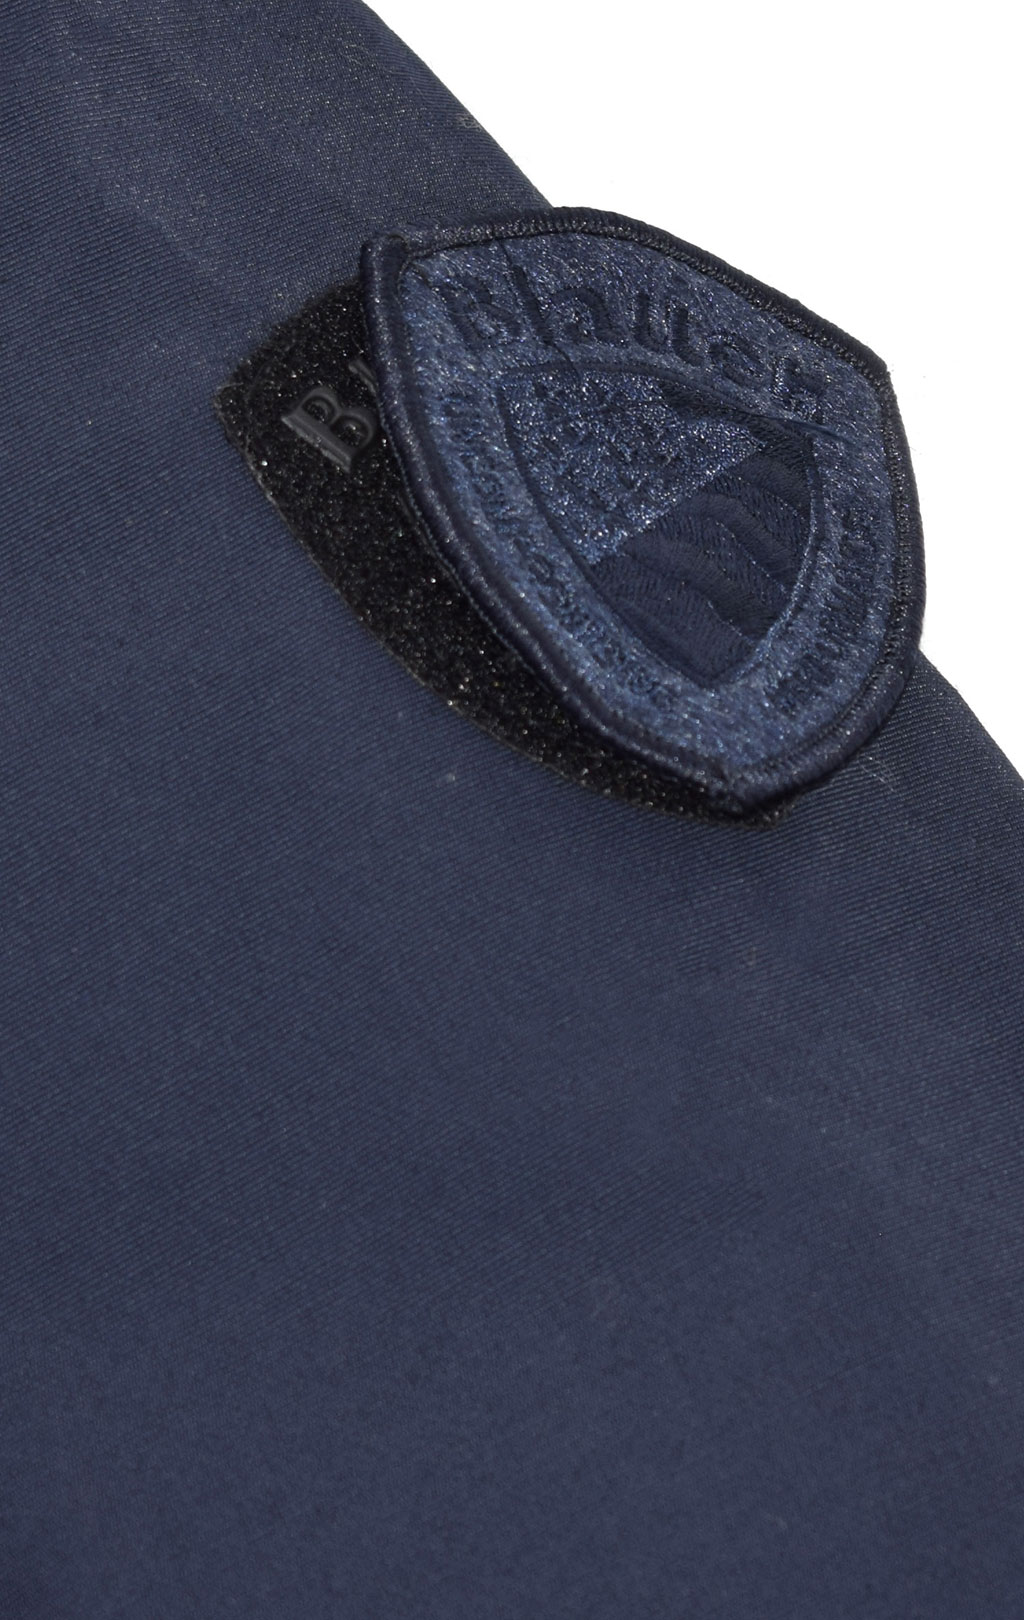 Куртка-аляска пуховая BLAUER RAINCOAT LONG FW 19/20 натур. мех dark blue (005565) 